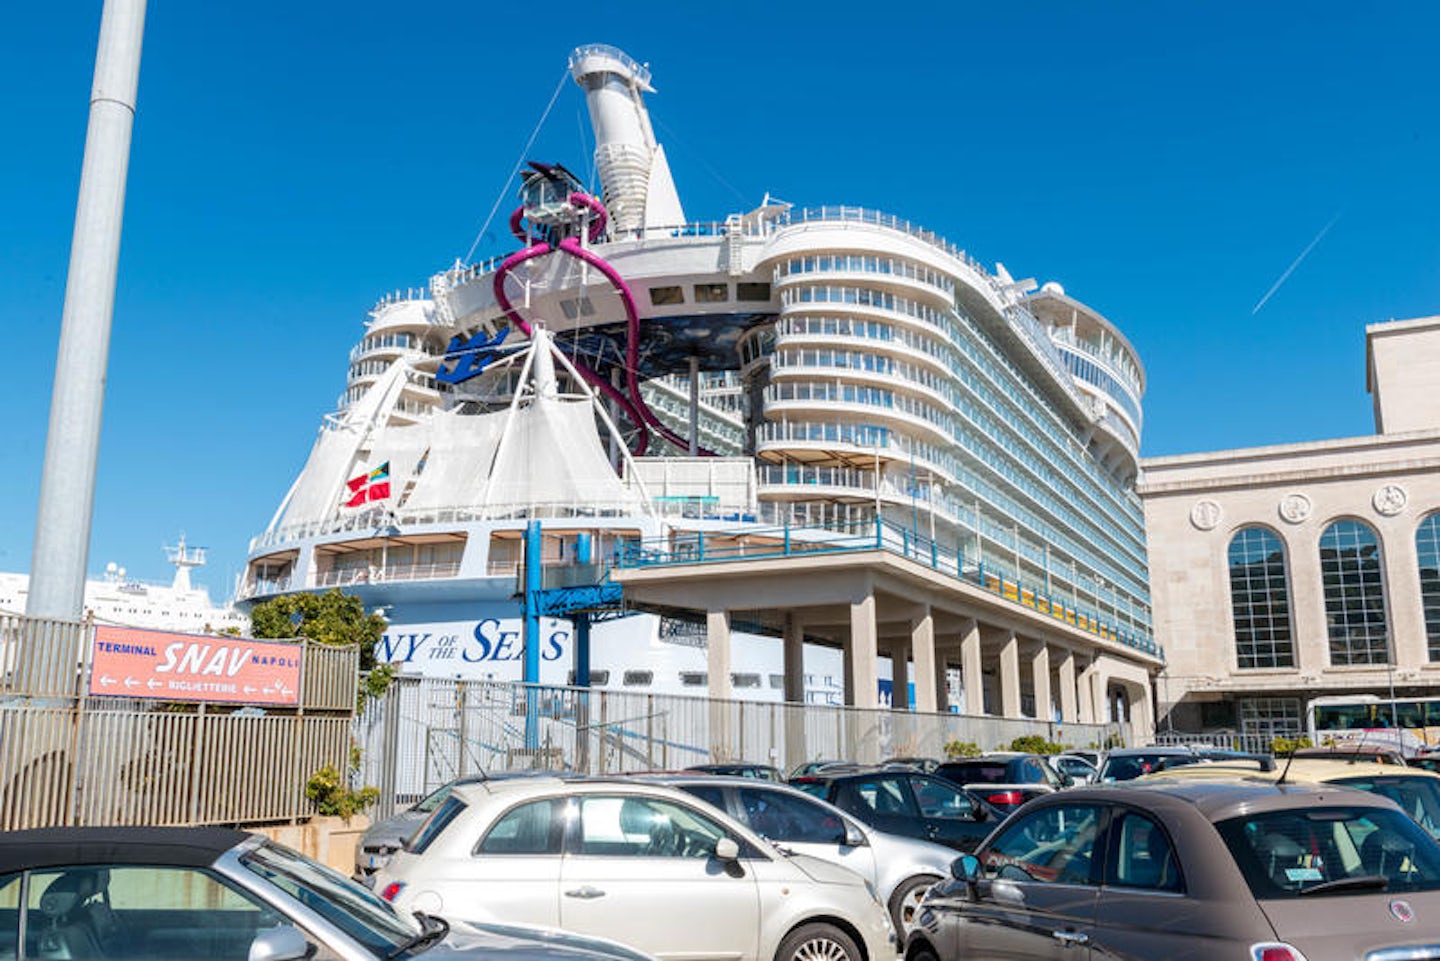 Naples Cruise Port